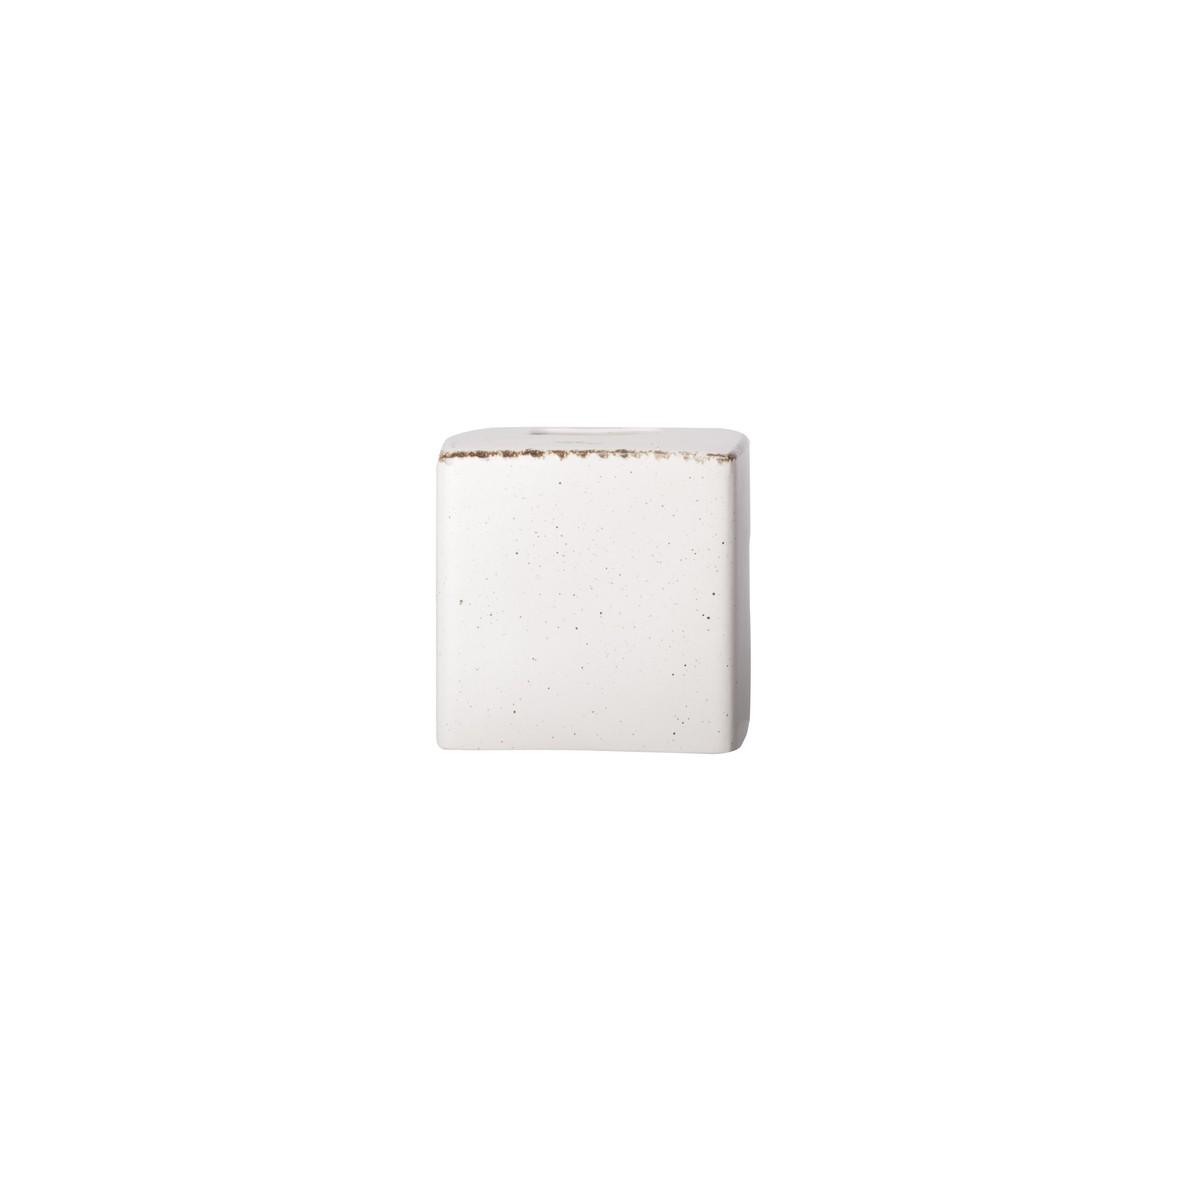  TOSCANA Boite Mouchoirs Toscana COX151-CRM Blanc crème 15 cm